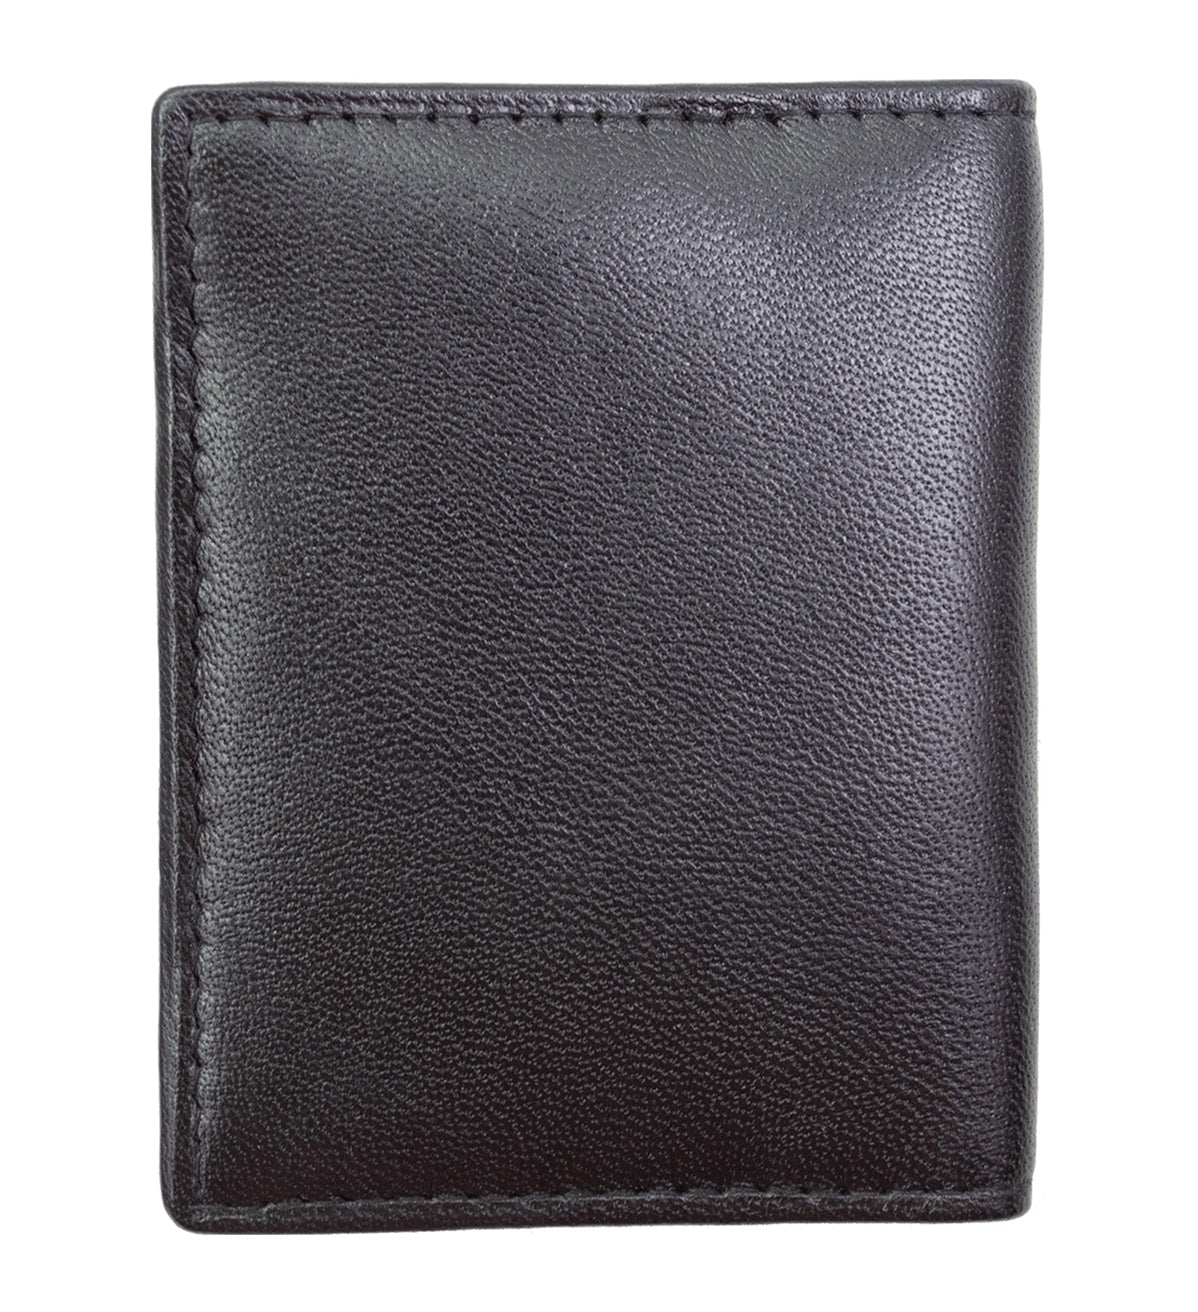 RFID Blocking Black Leather Wallet Pocket Business Card Organizer Clear Sleeve Insert ID Badge